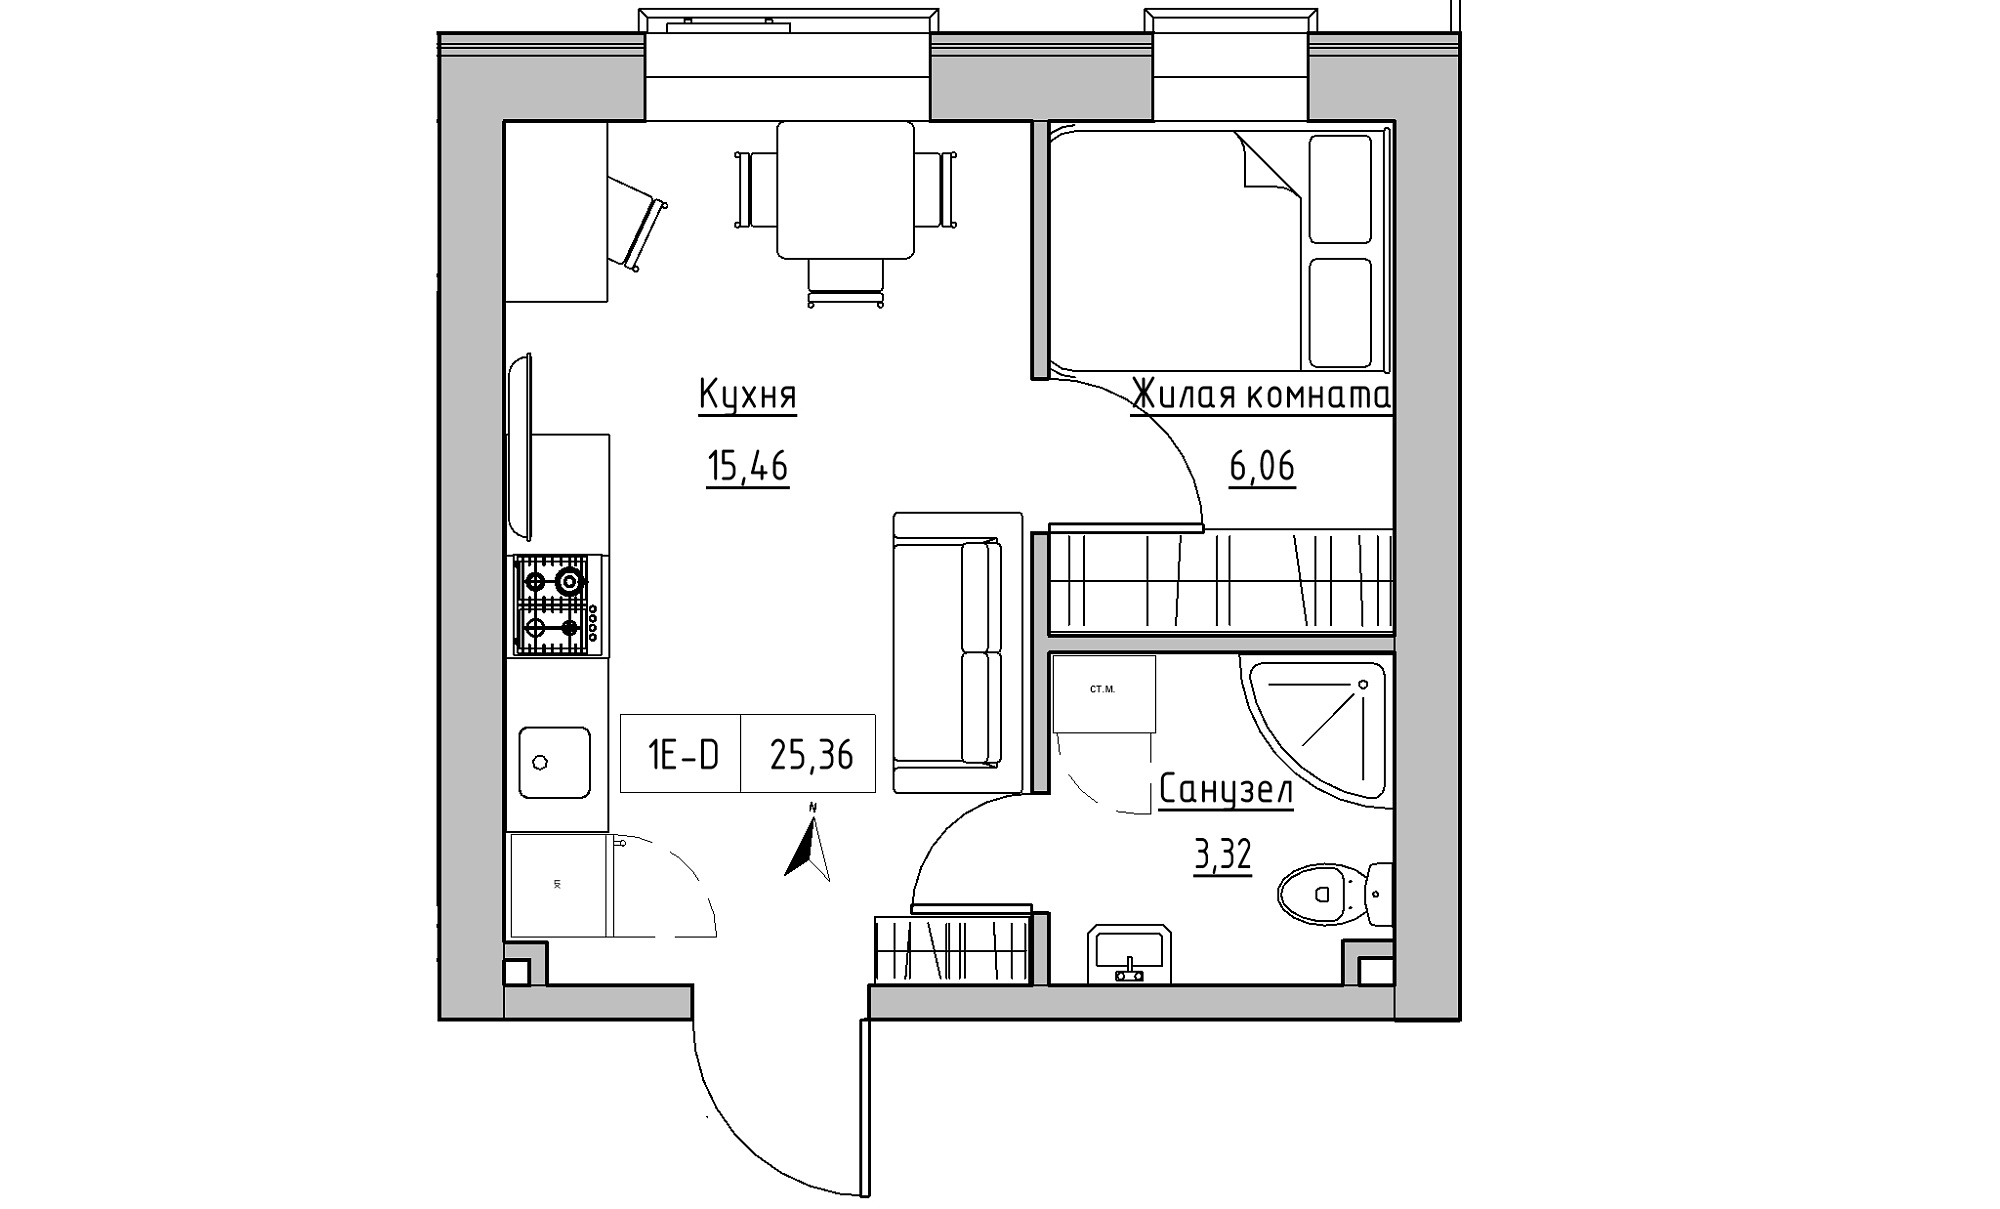 Planning 1-rm flats area 25.36m2, KS-016-03/0002.